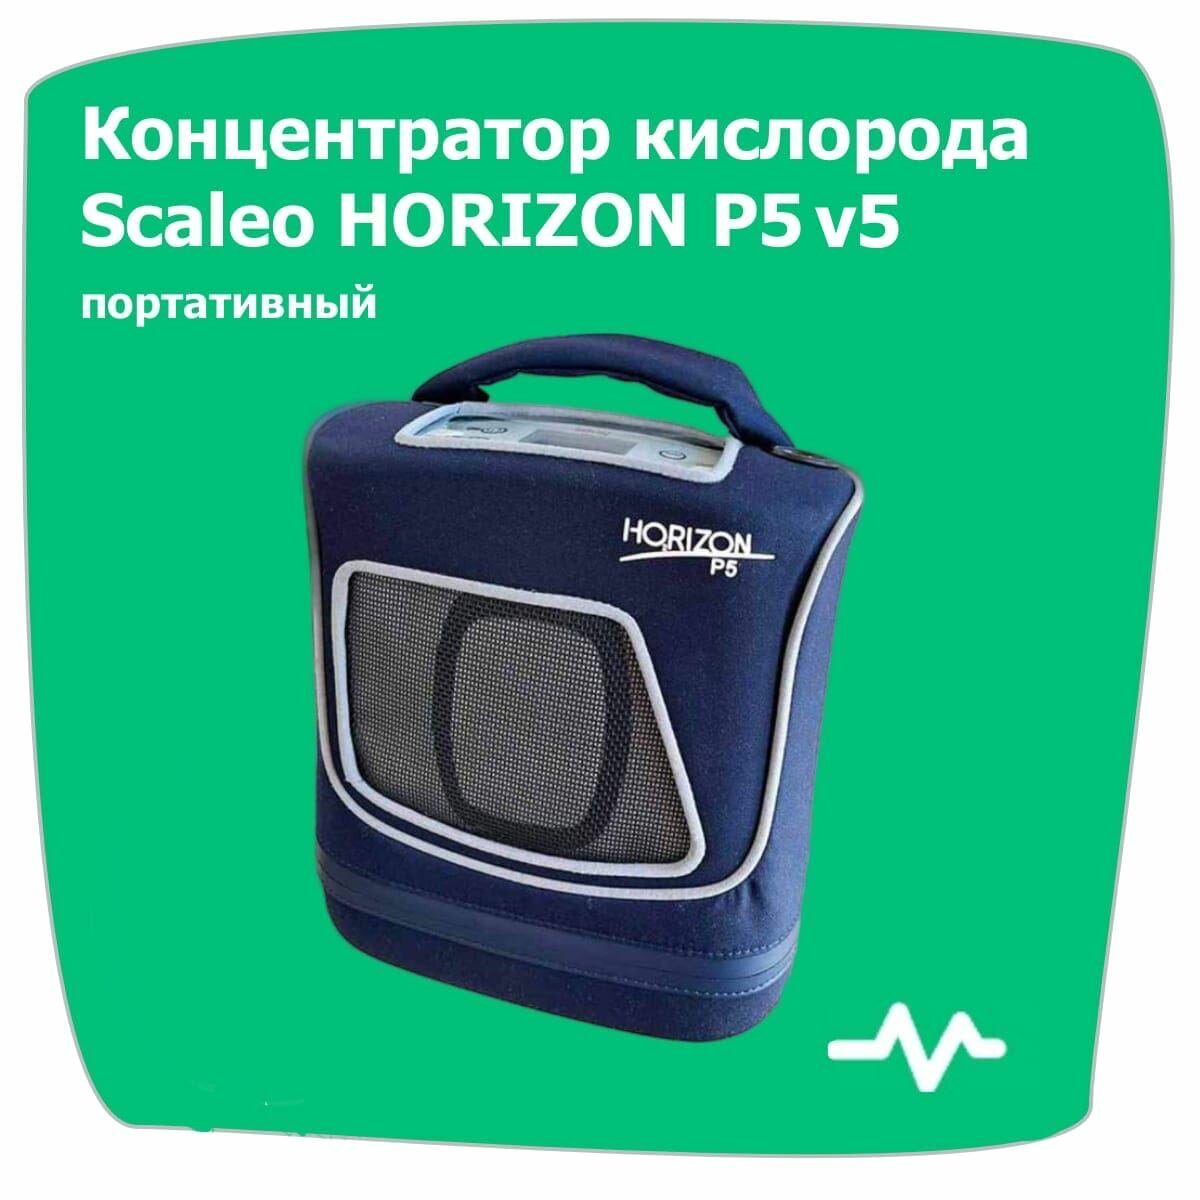 Scaleo HORIZON P5 V5 - портативный концентратор кислорода